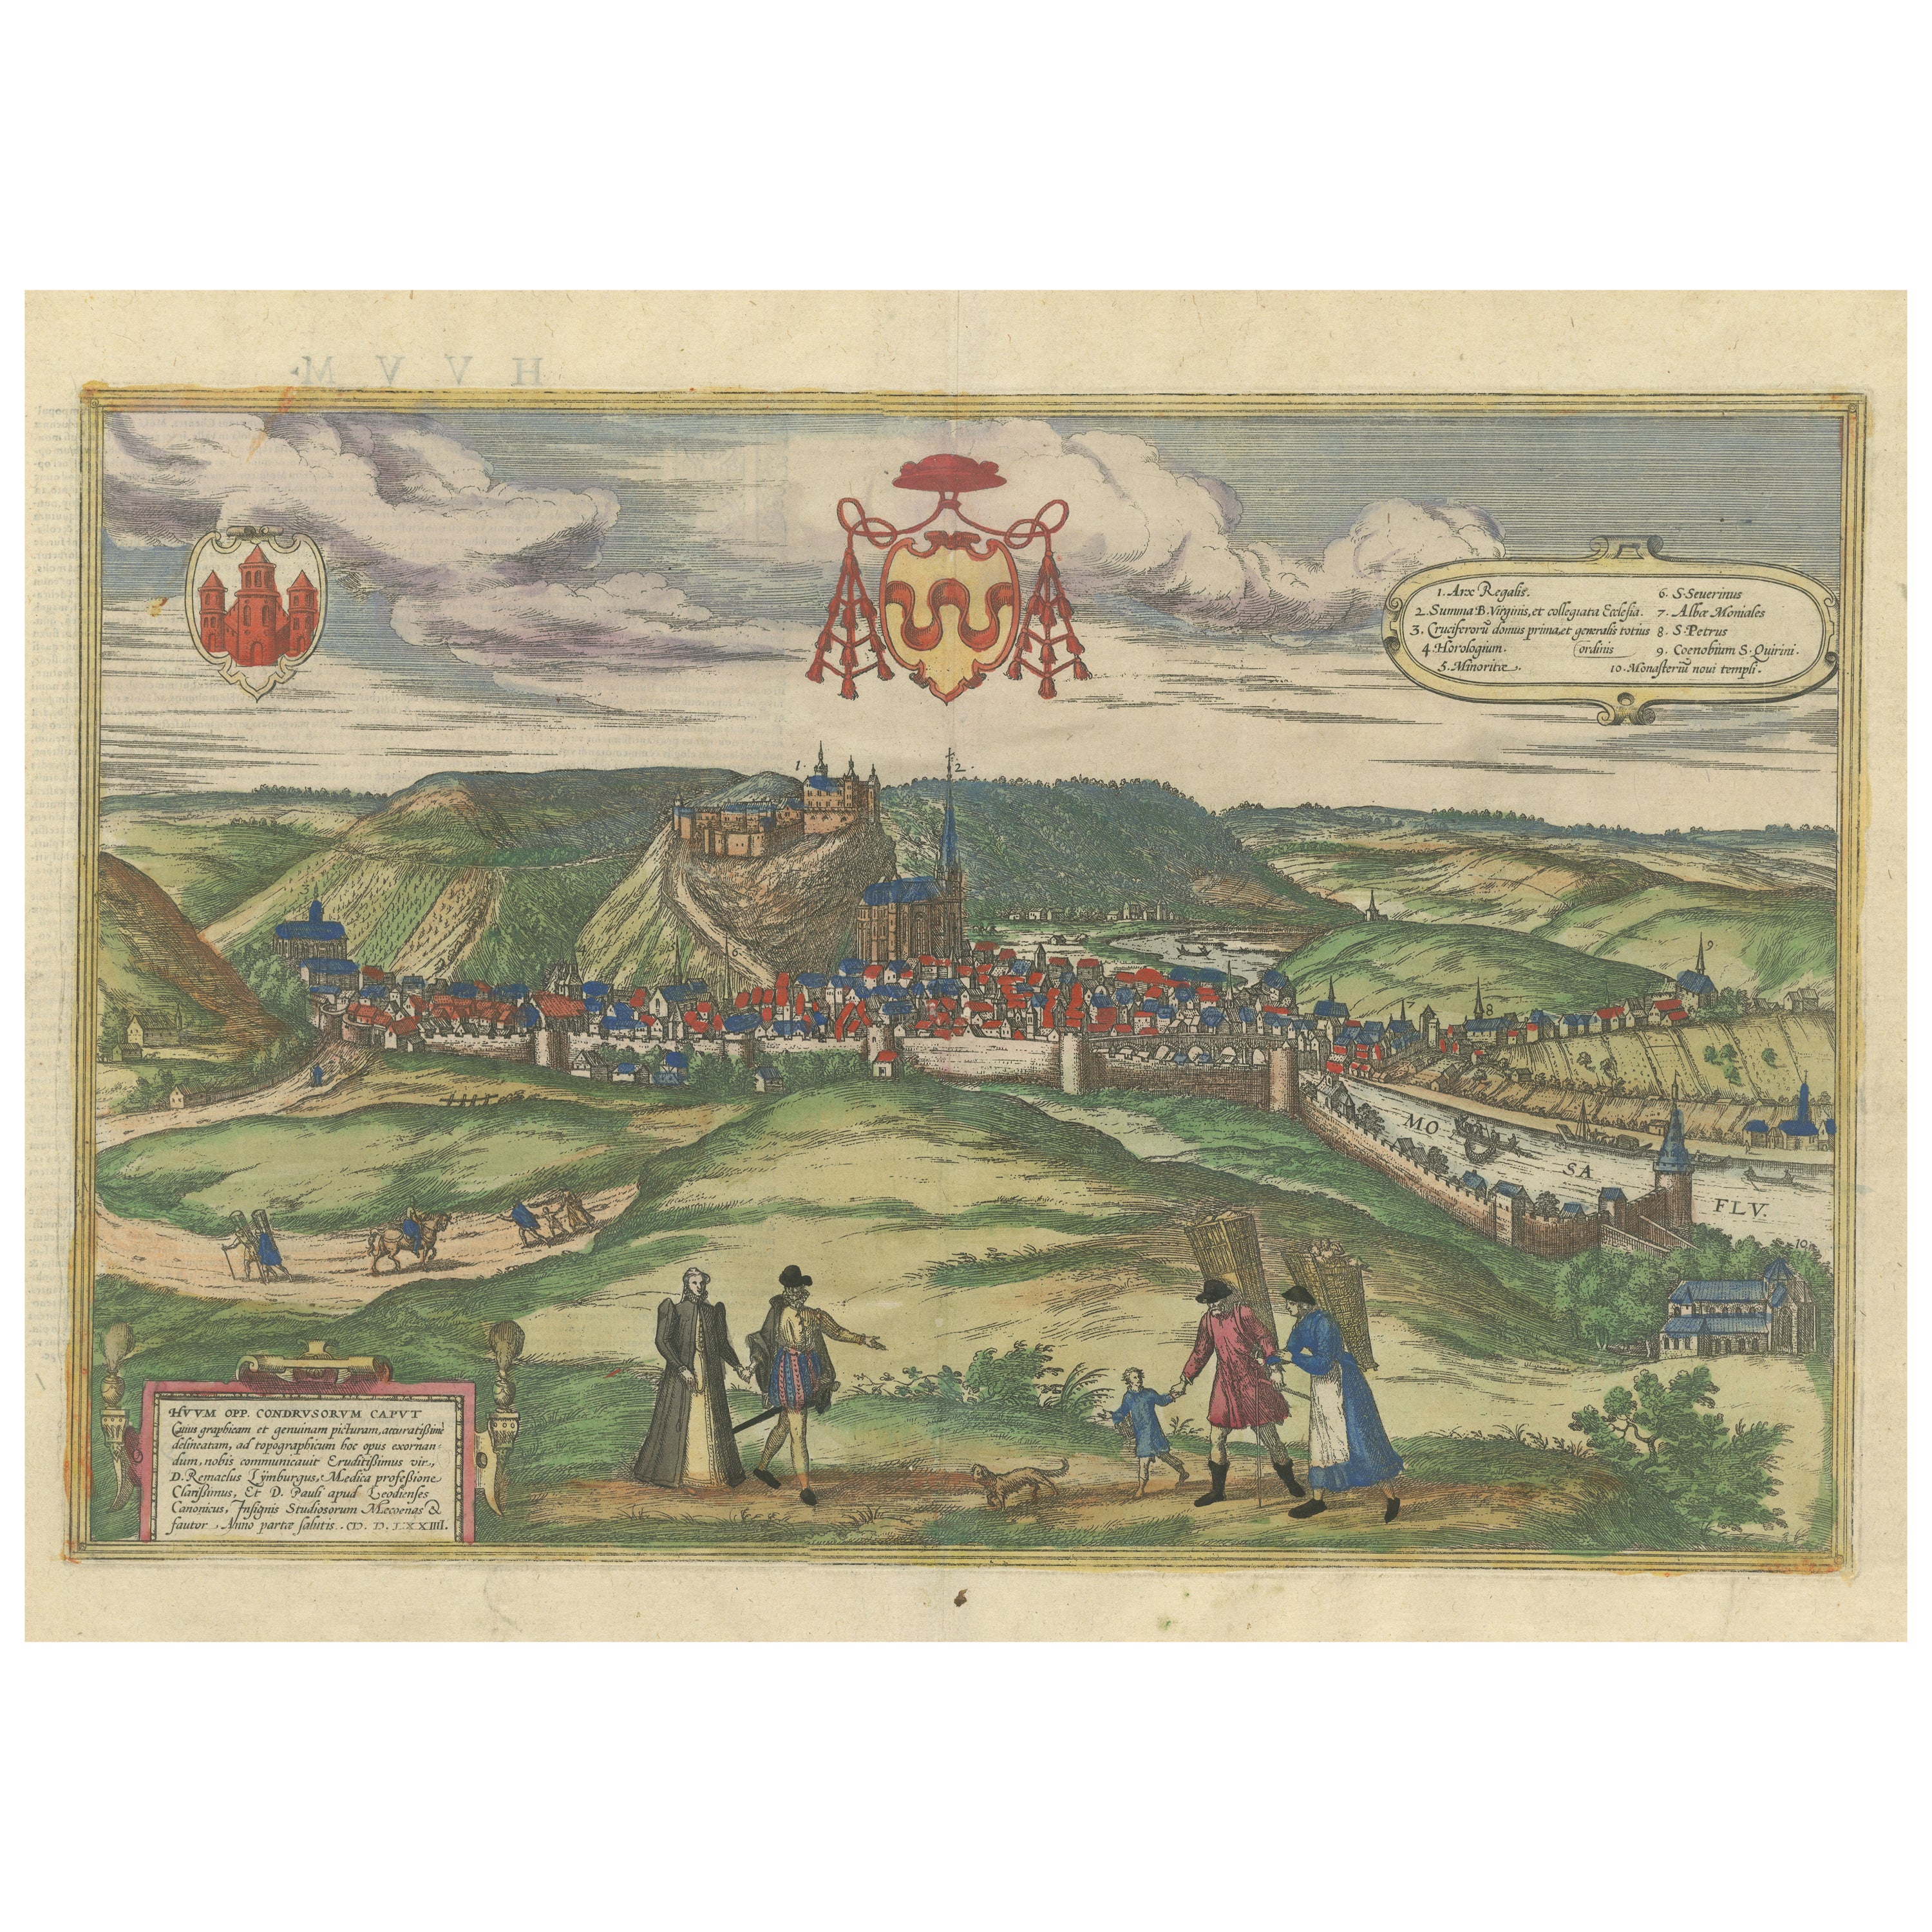 Original Antique Print of Huy in present day Belgium, Published circa 1580